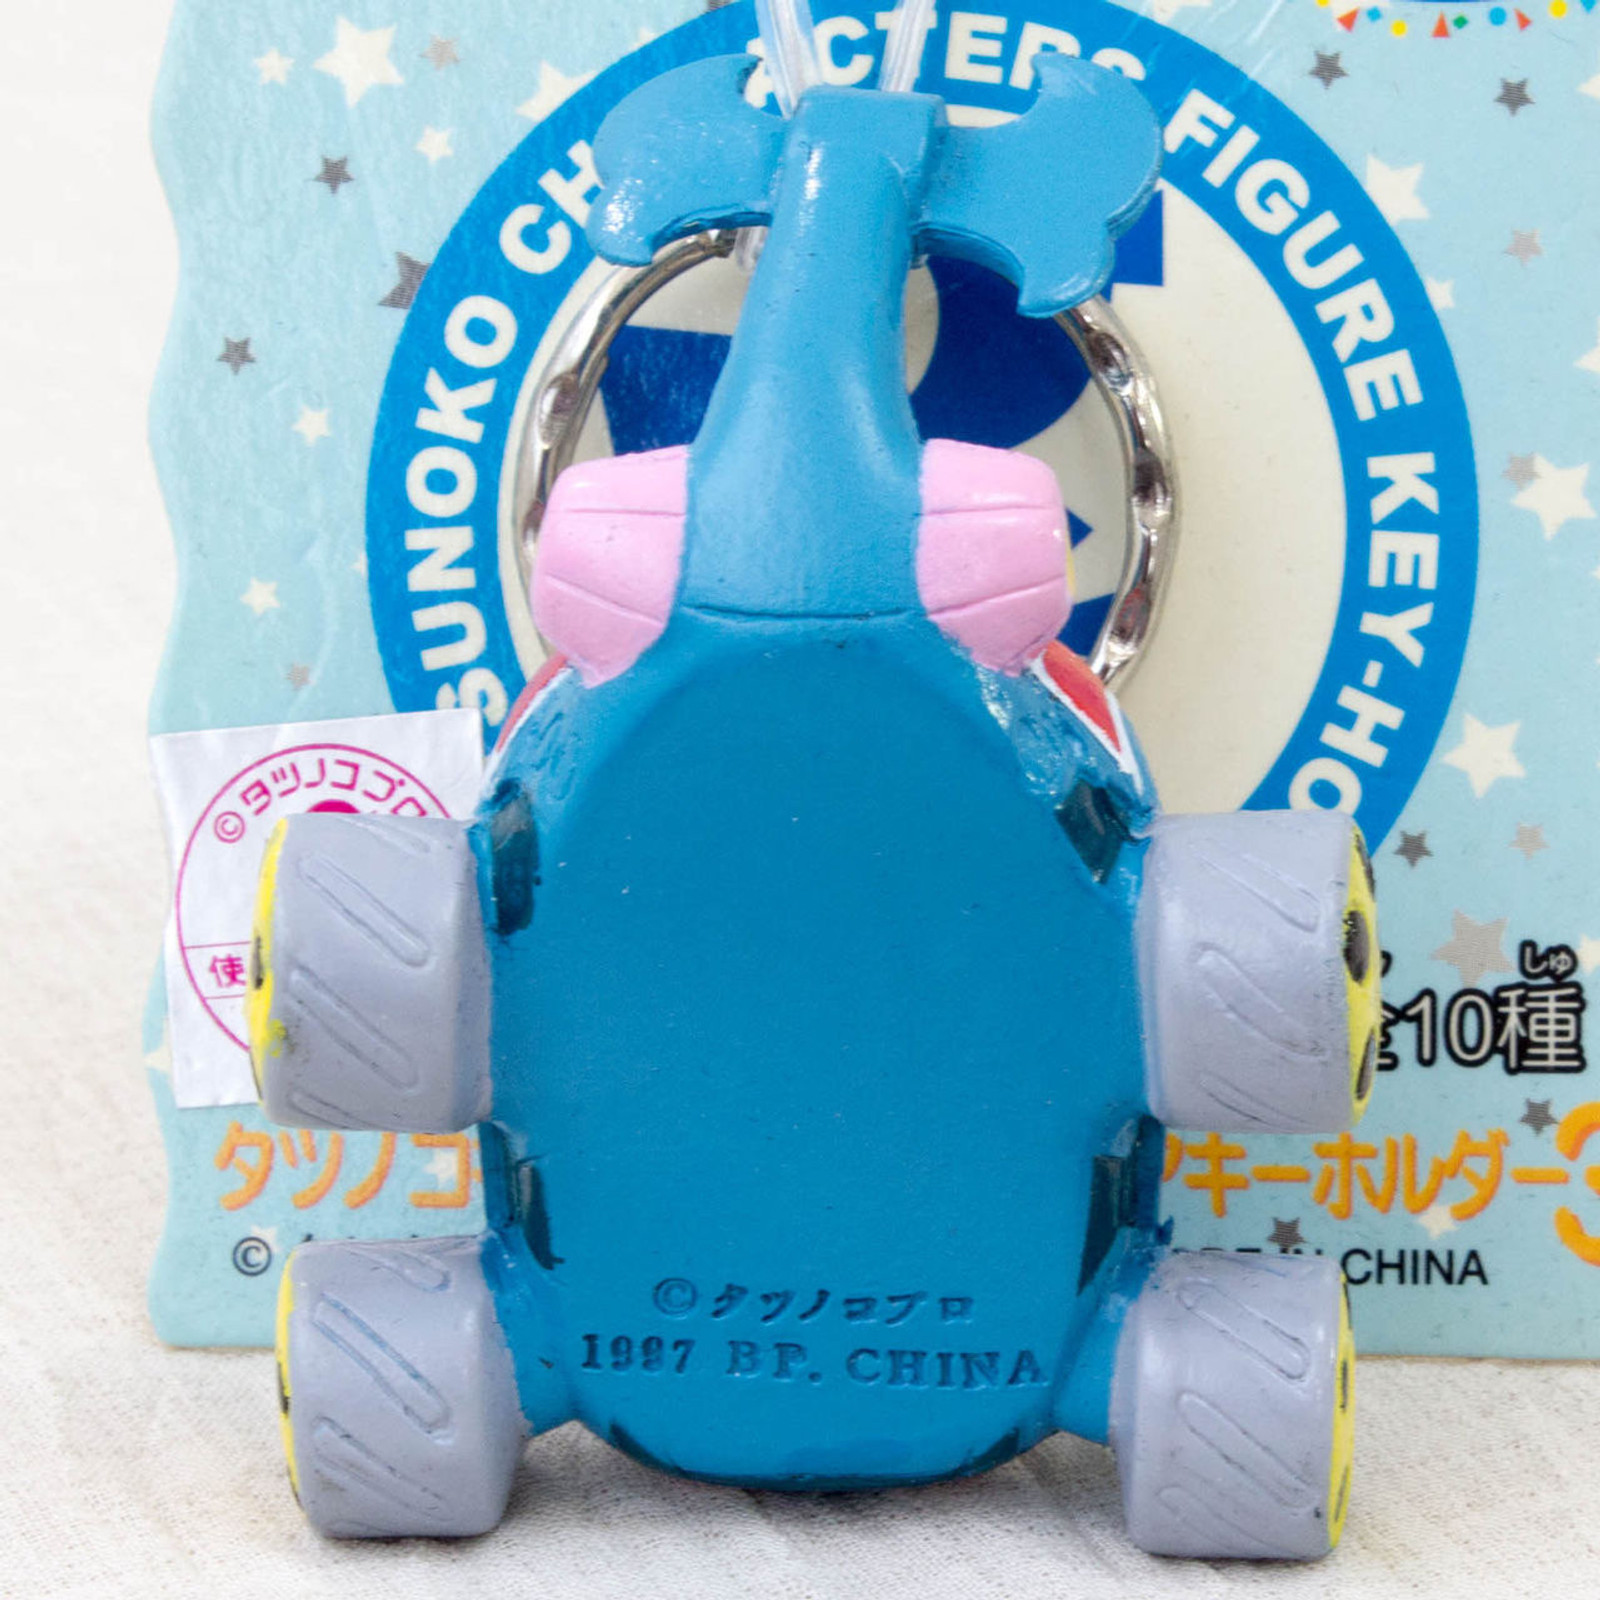 Time Bokan Mechabuton Mascot Figure Key Chain Tatsunoko Pro JAPAN ANIME MANGA